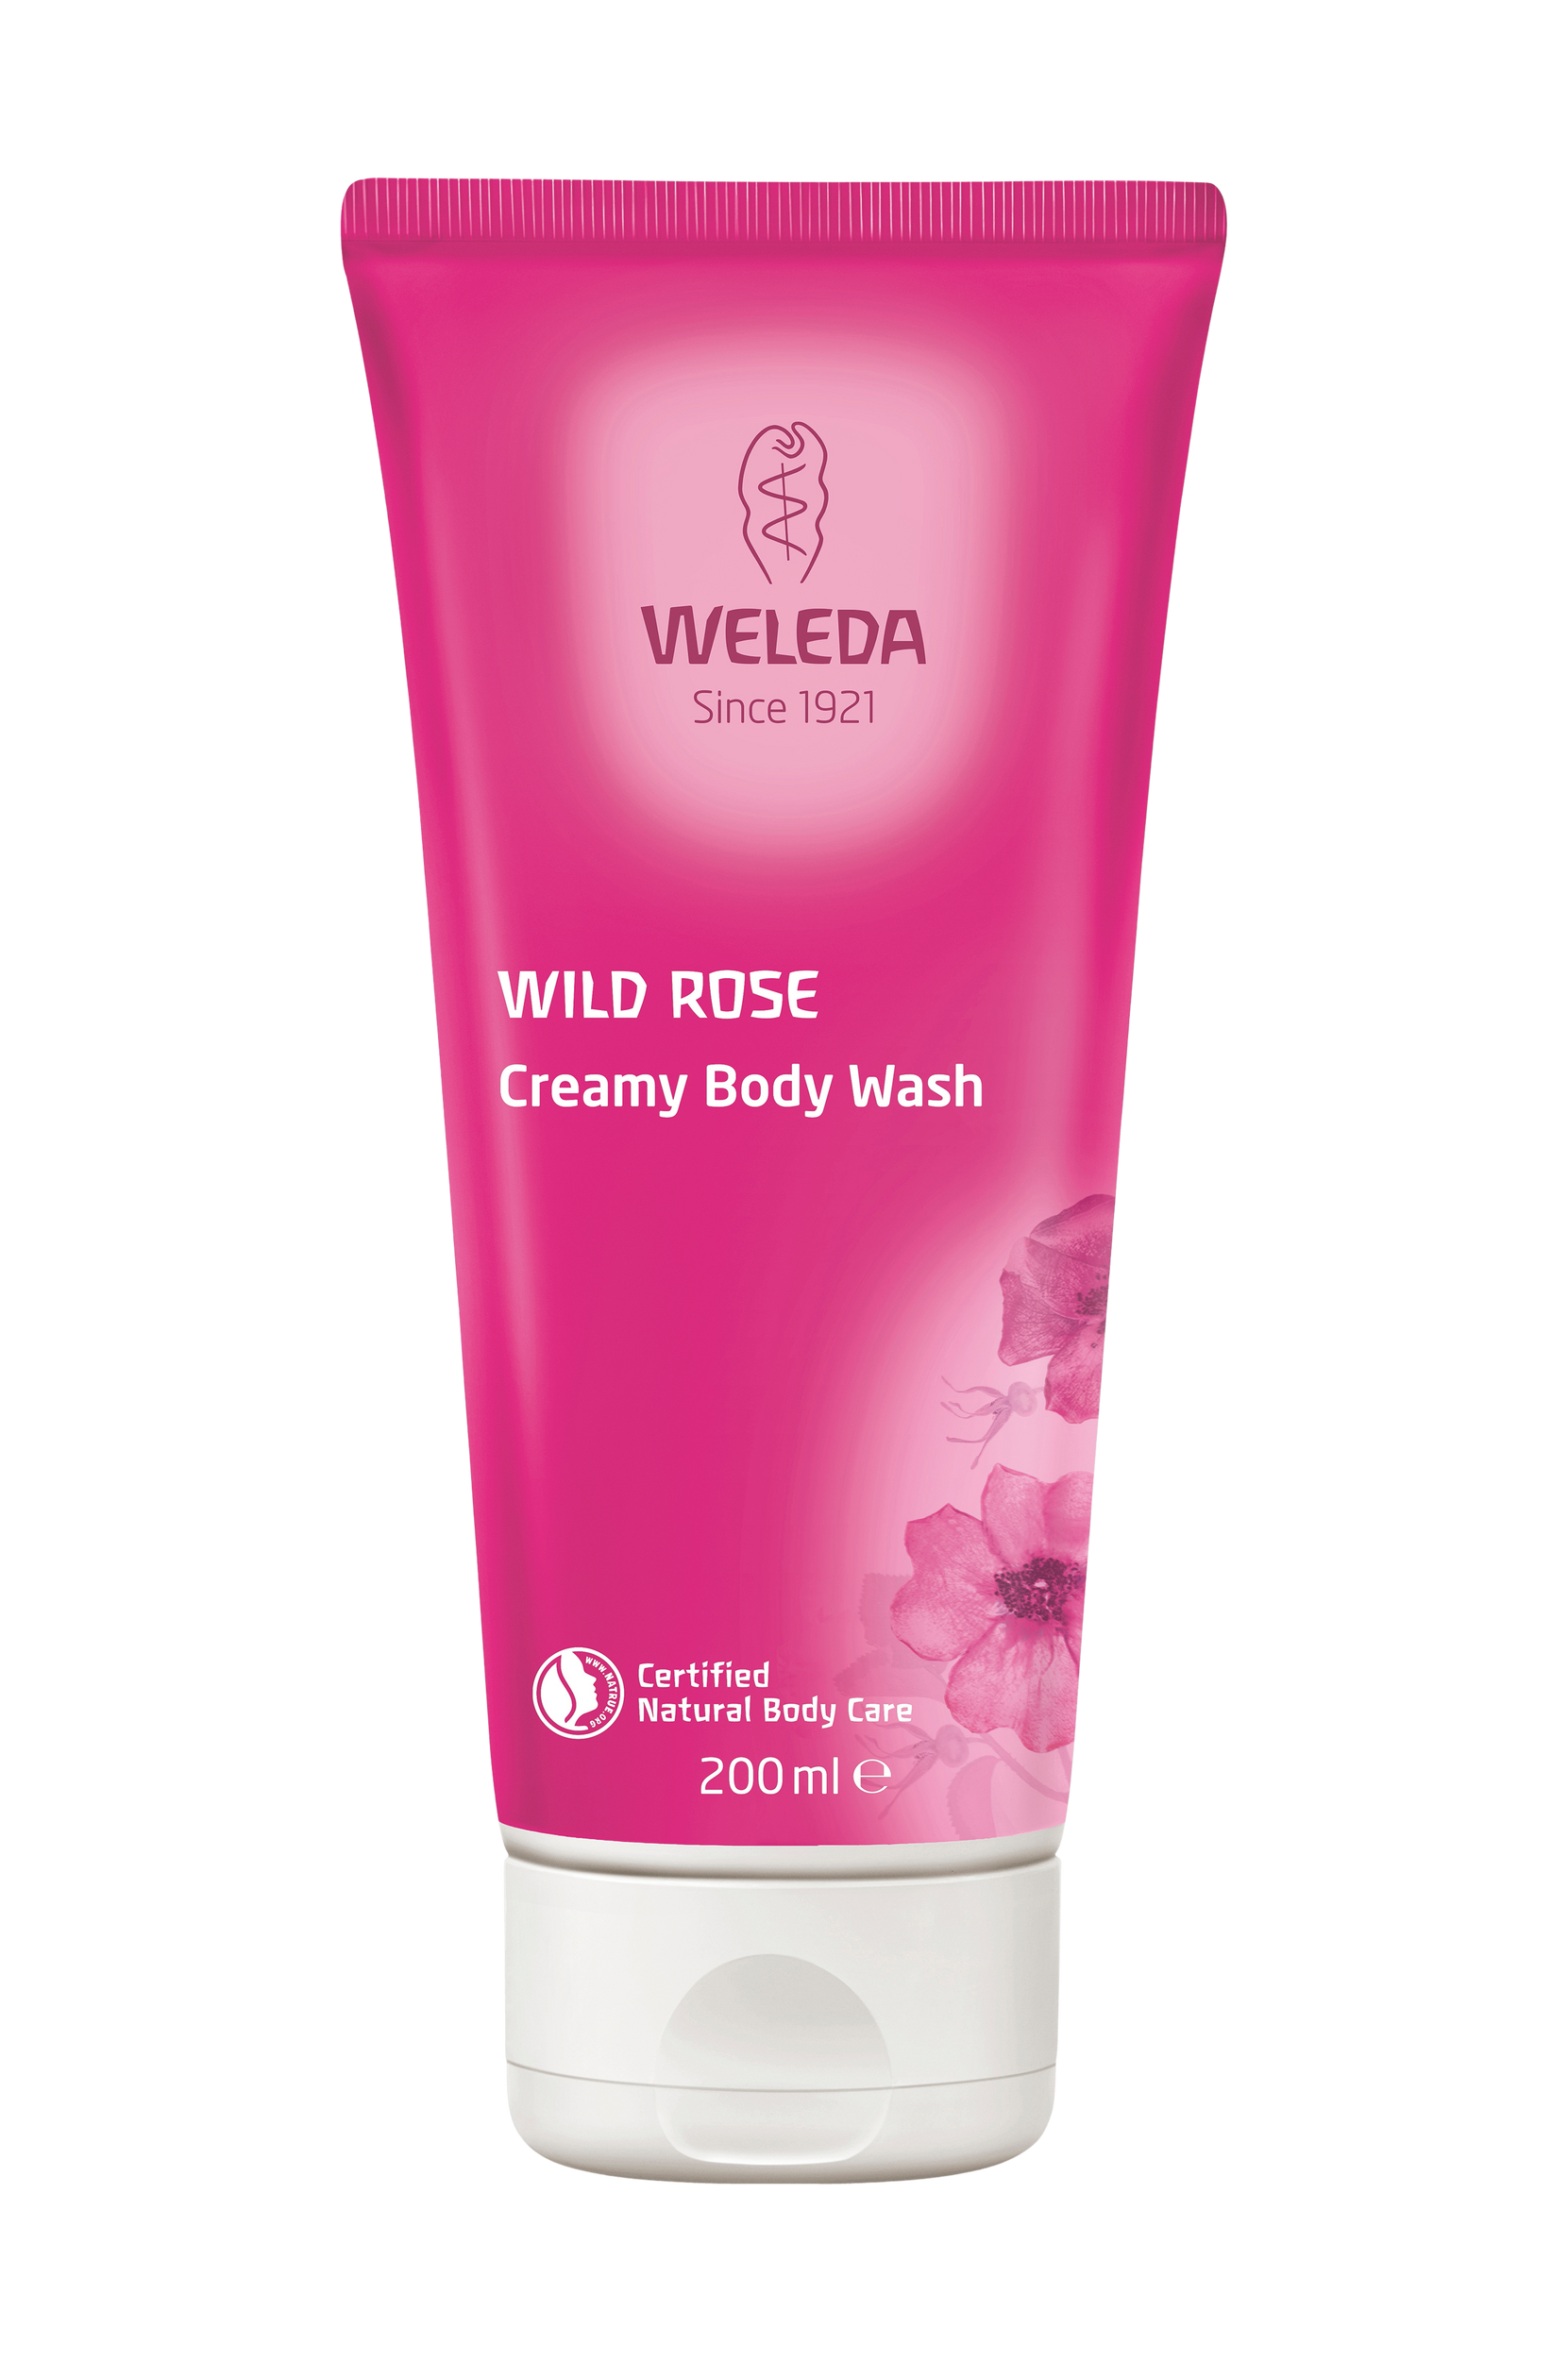 Wild Rose Creamy Body Wash, Weleda